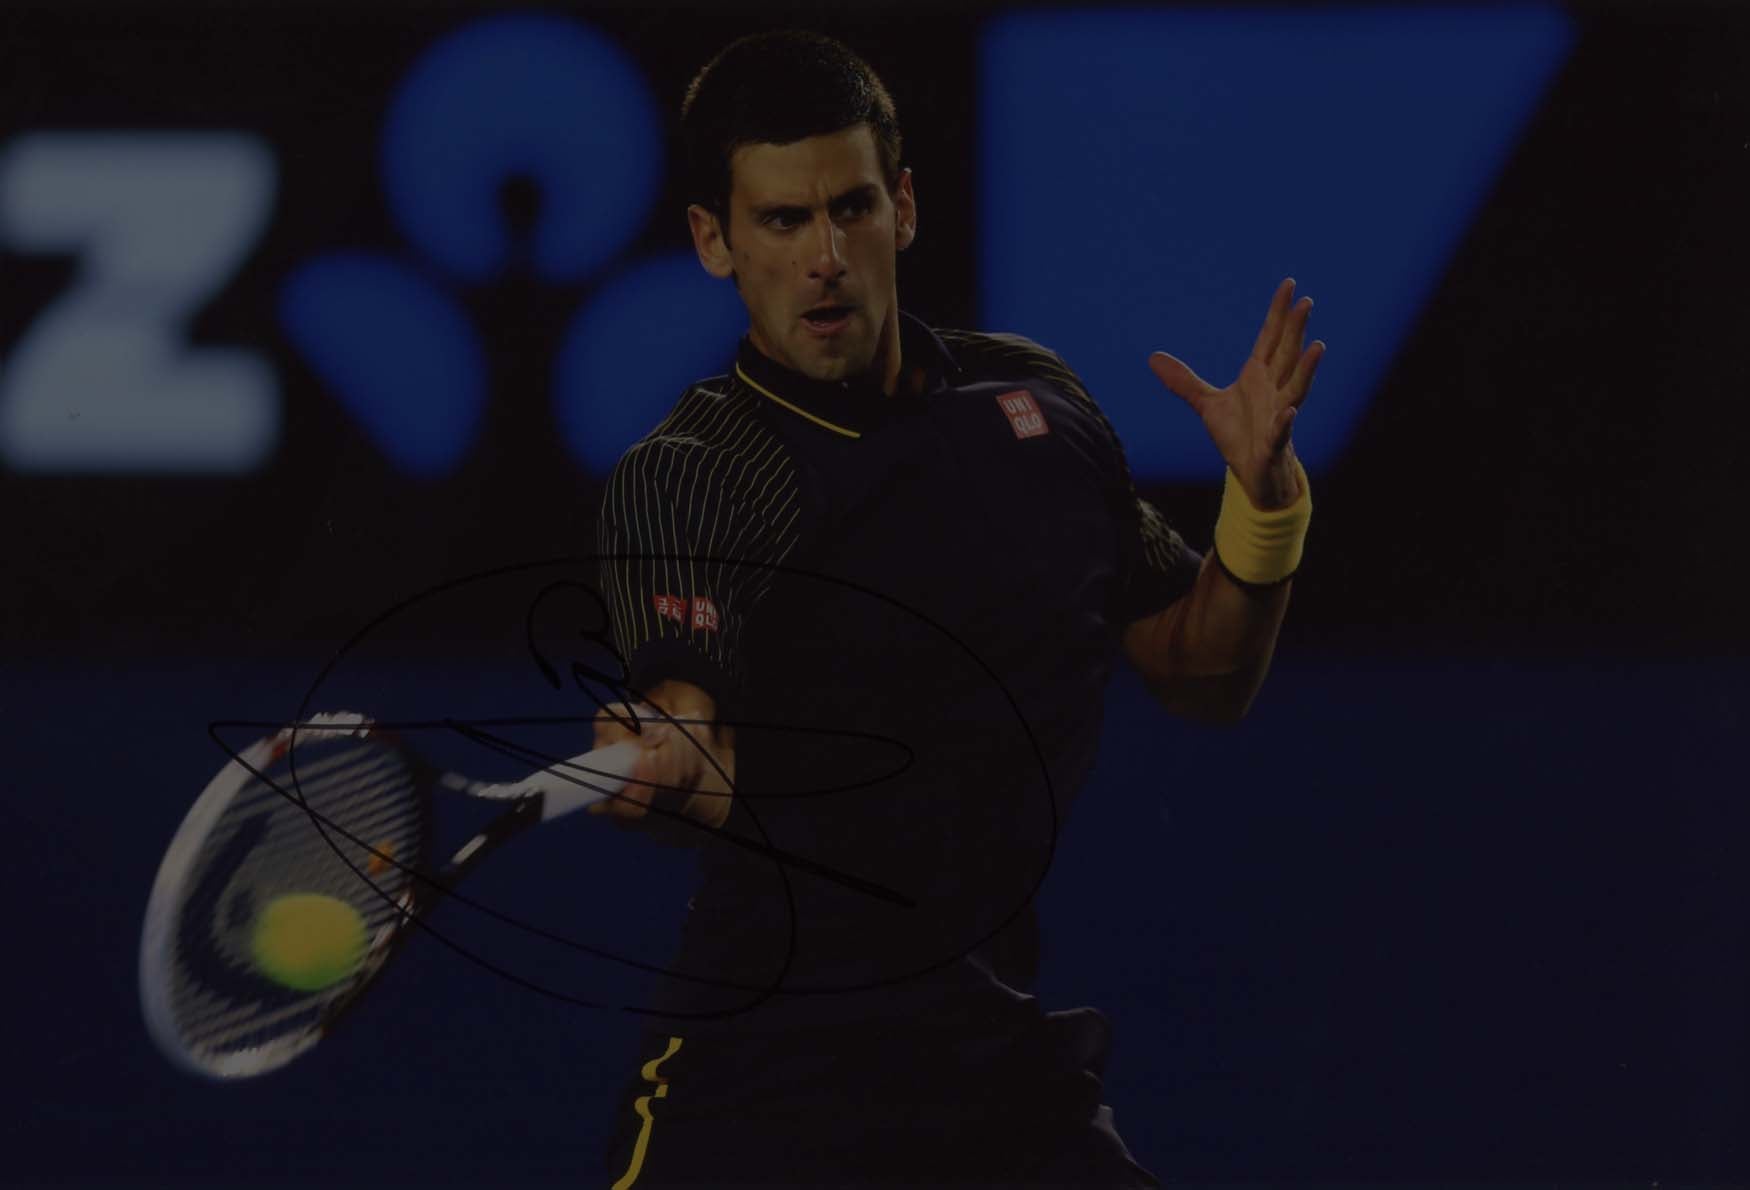 Novak Djokovic Autograph signed photographs